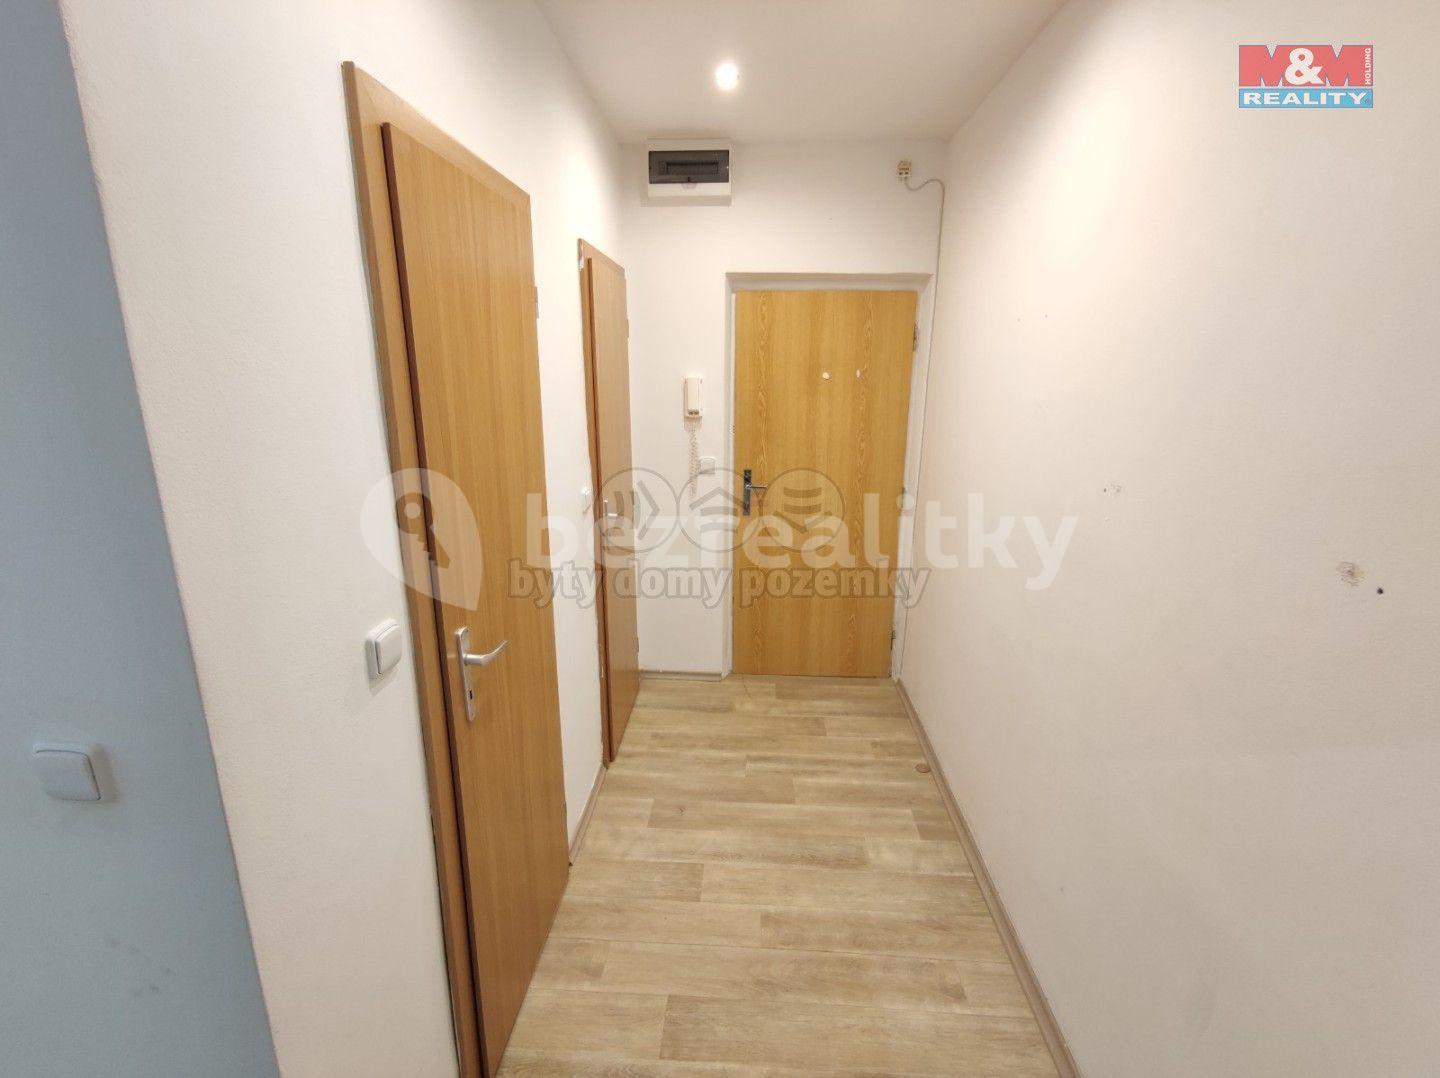 Predaj bytu 2-izbový 52 m², Alberta Kučery, Ostrava, Moravskoslezský kraj